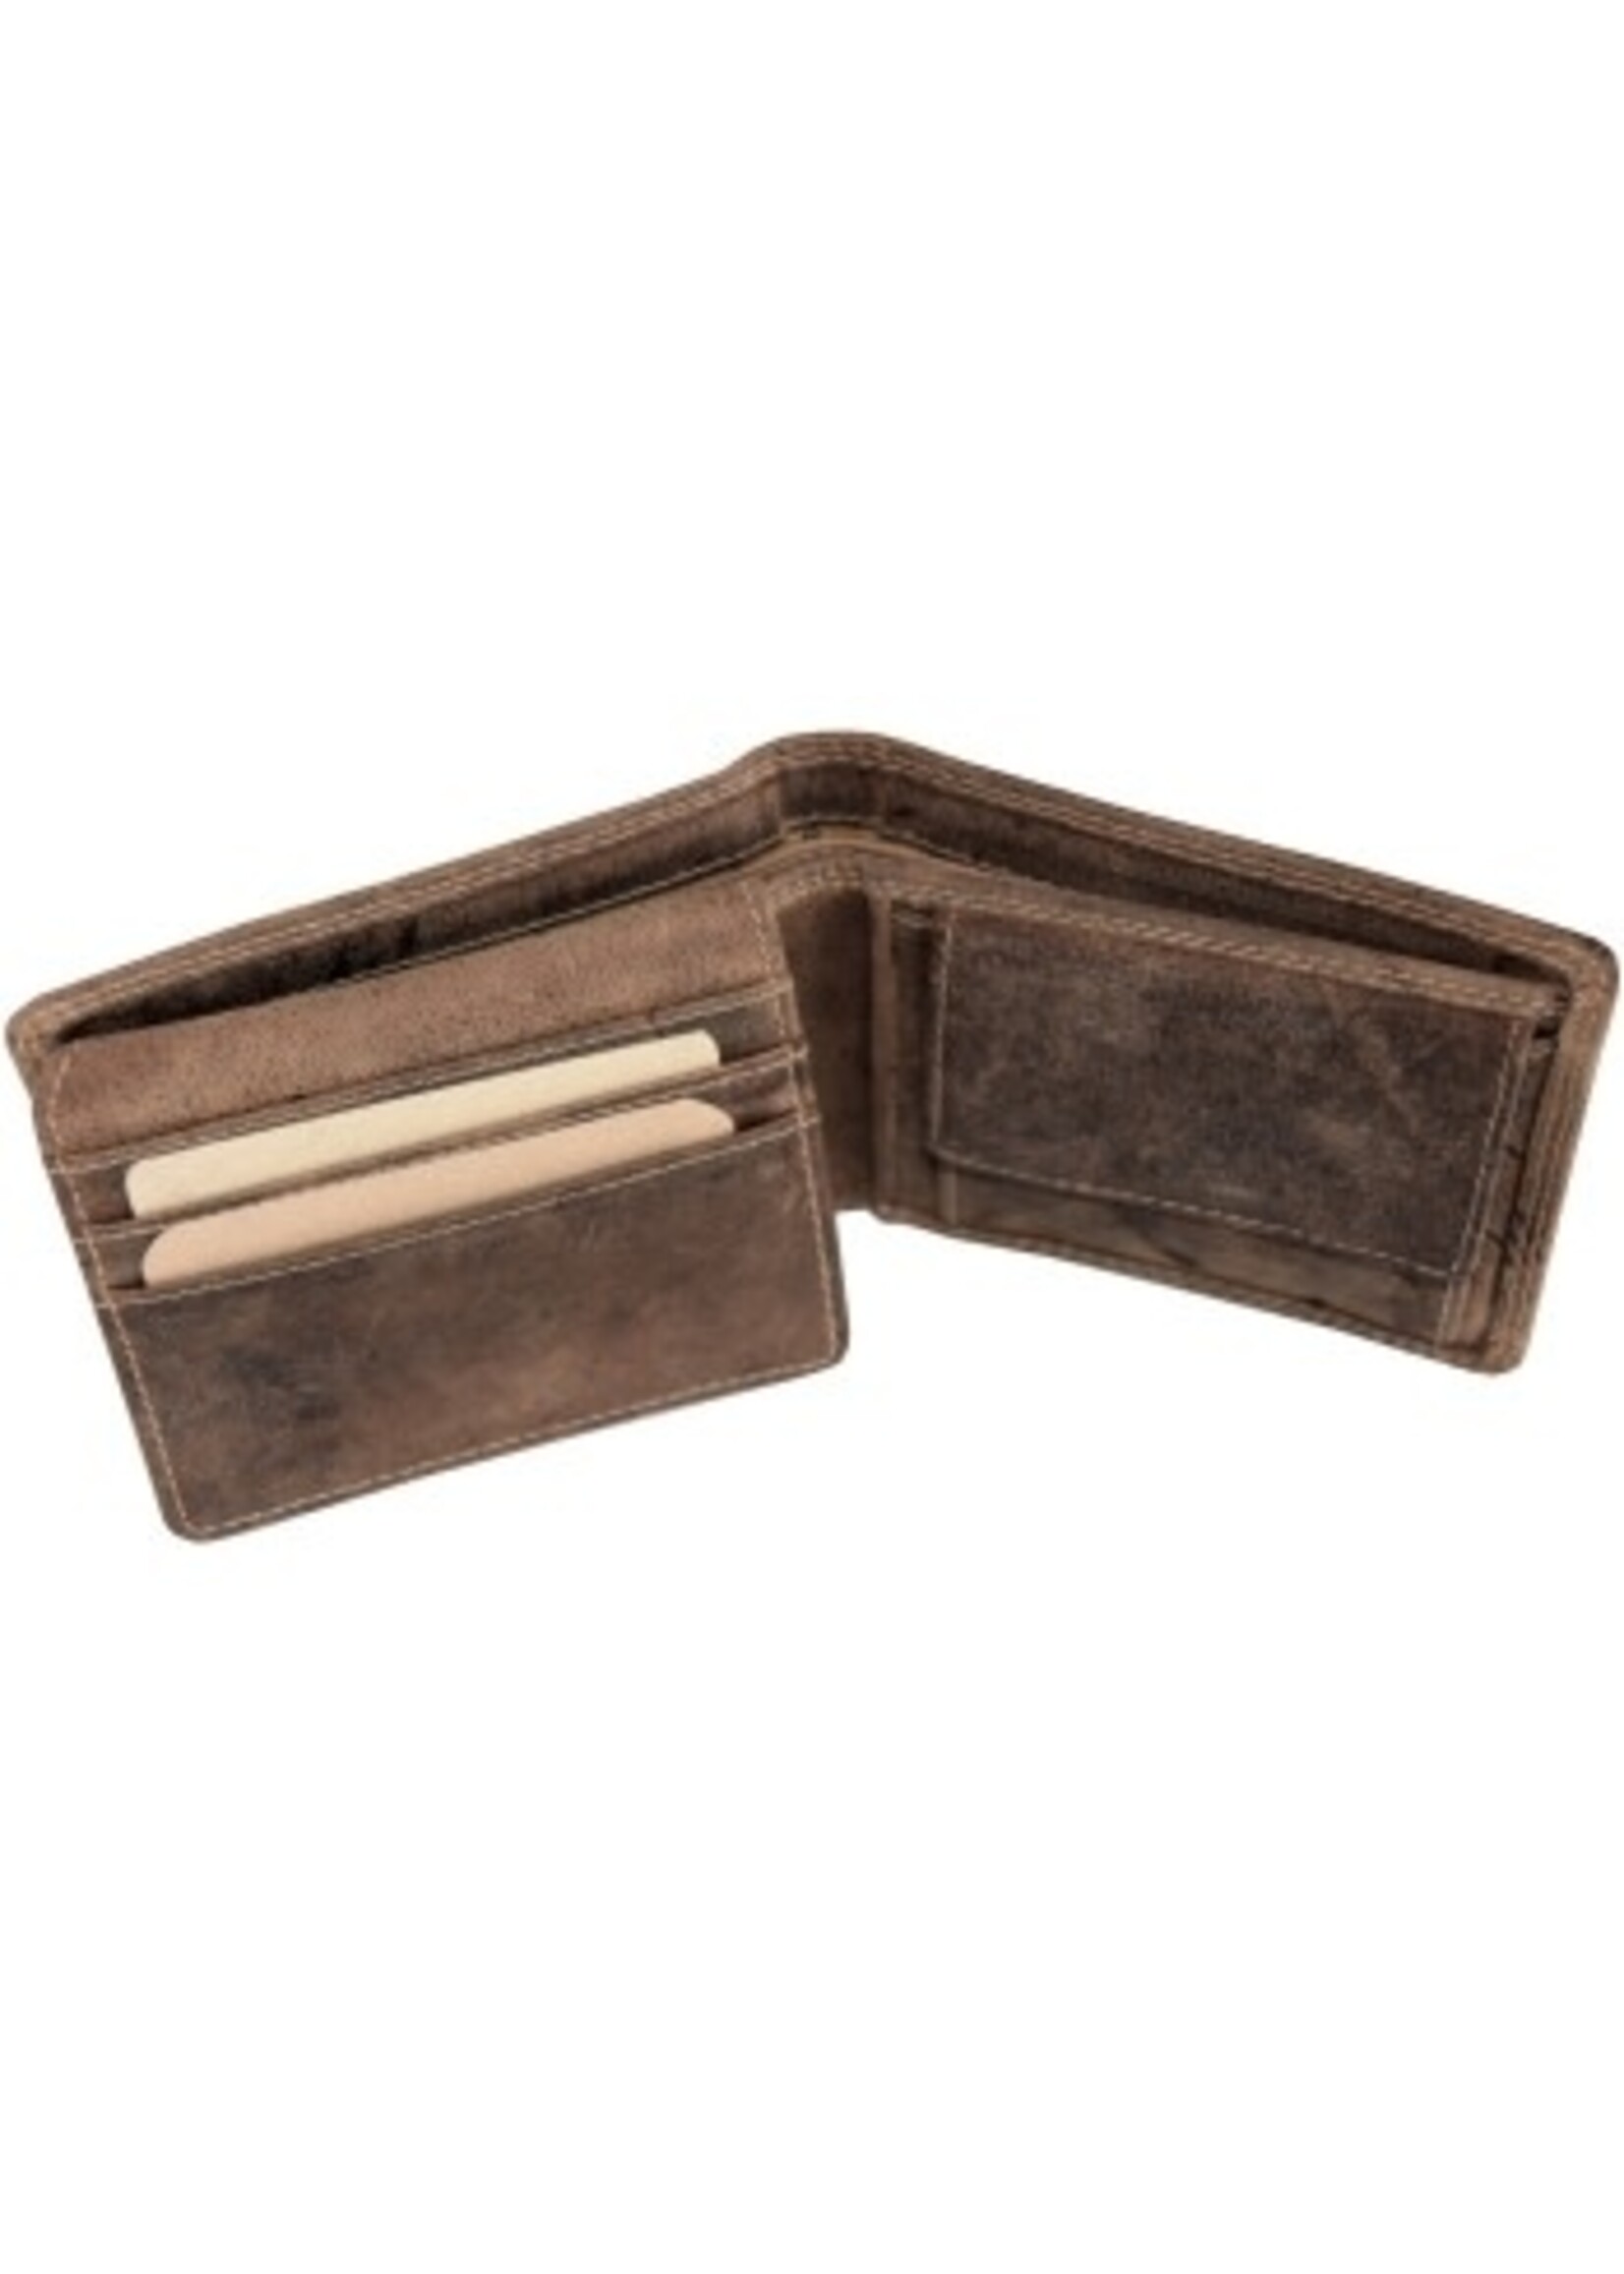 Adrian Klis Men's wallet with change compartment